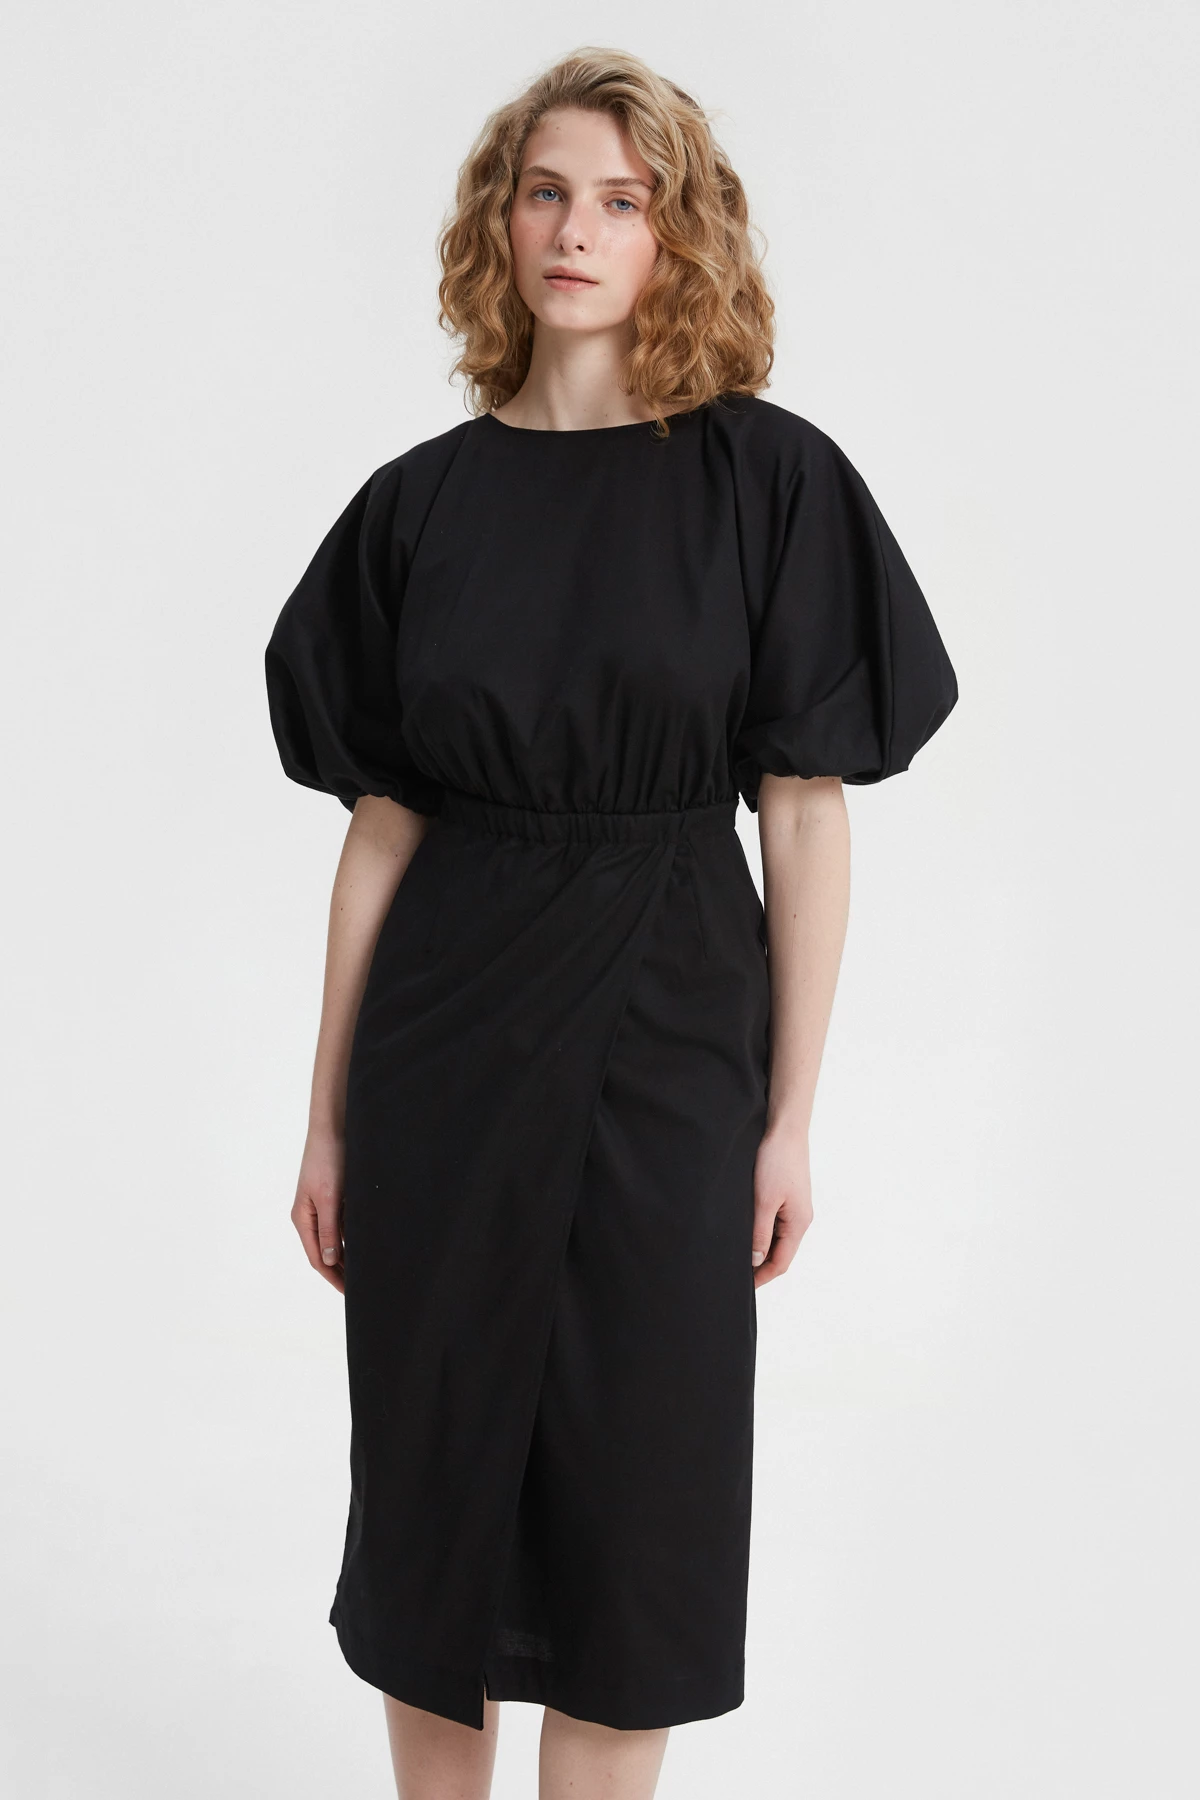 Black midi dress with voluminous top made of shirt fabric , photo 1